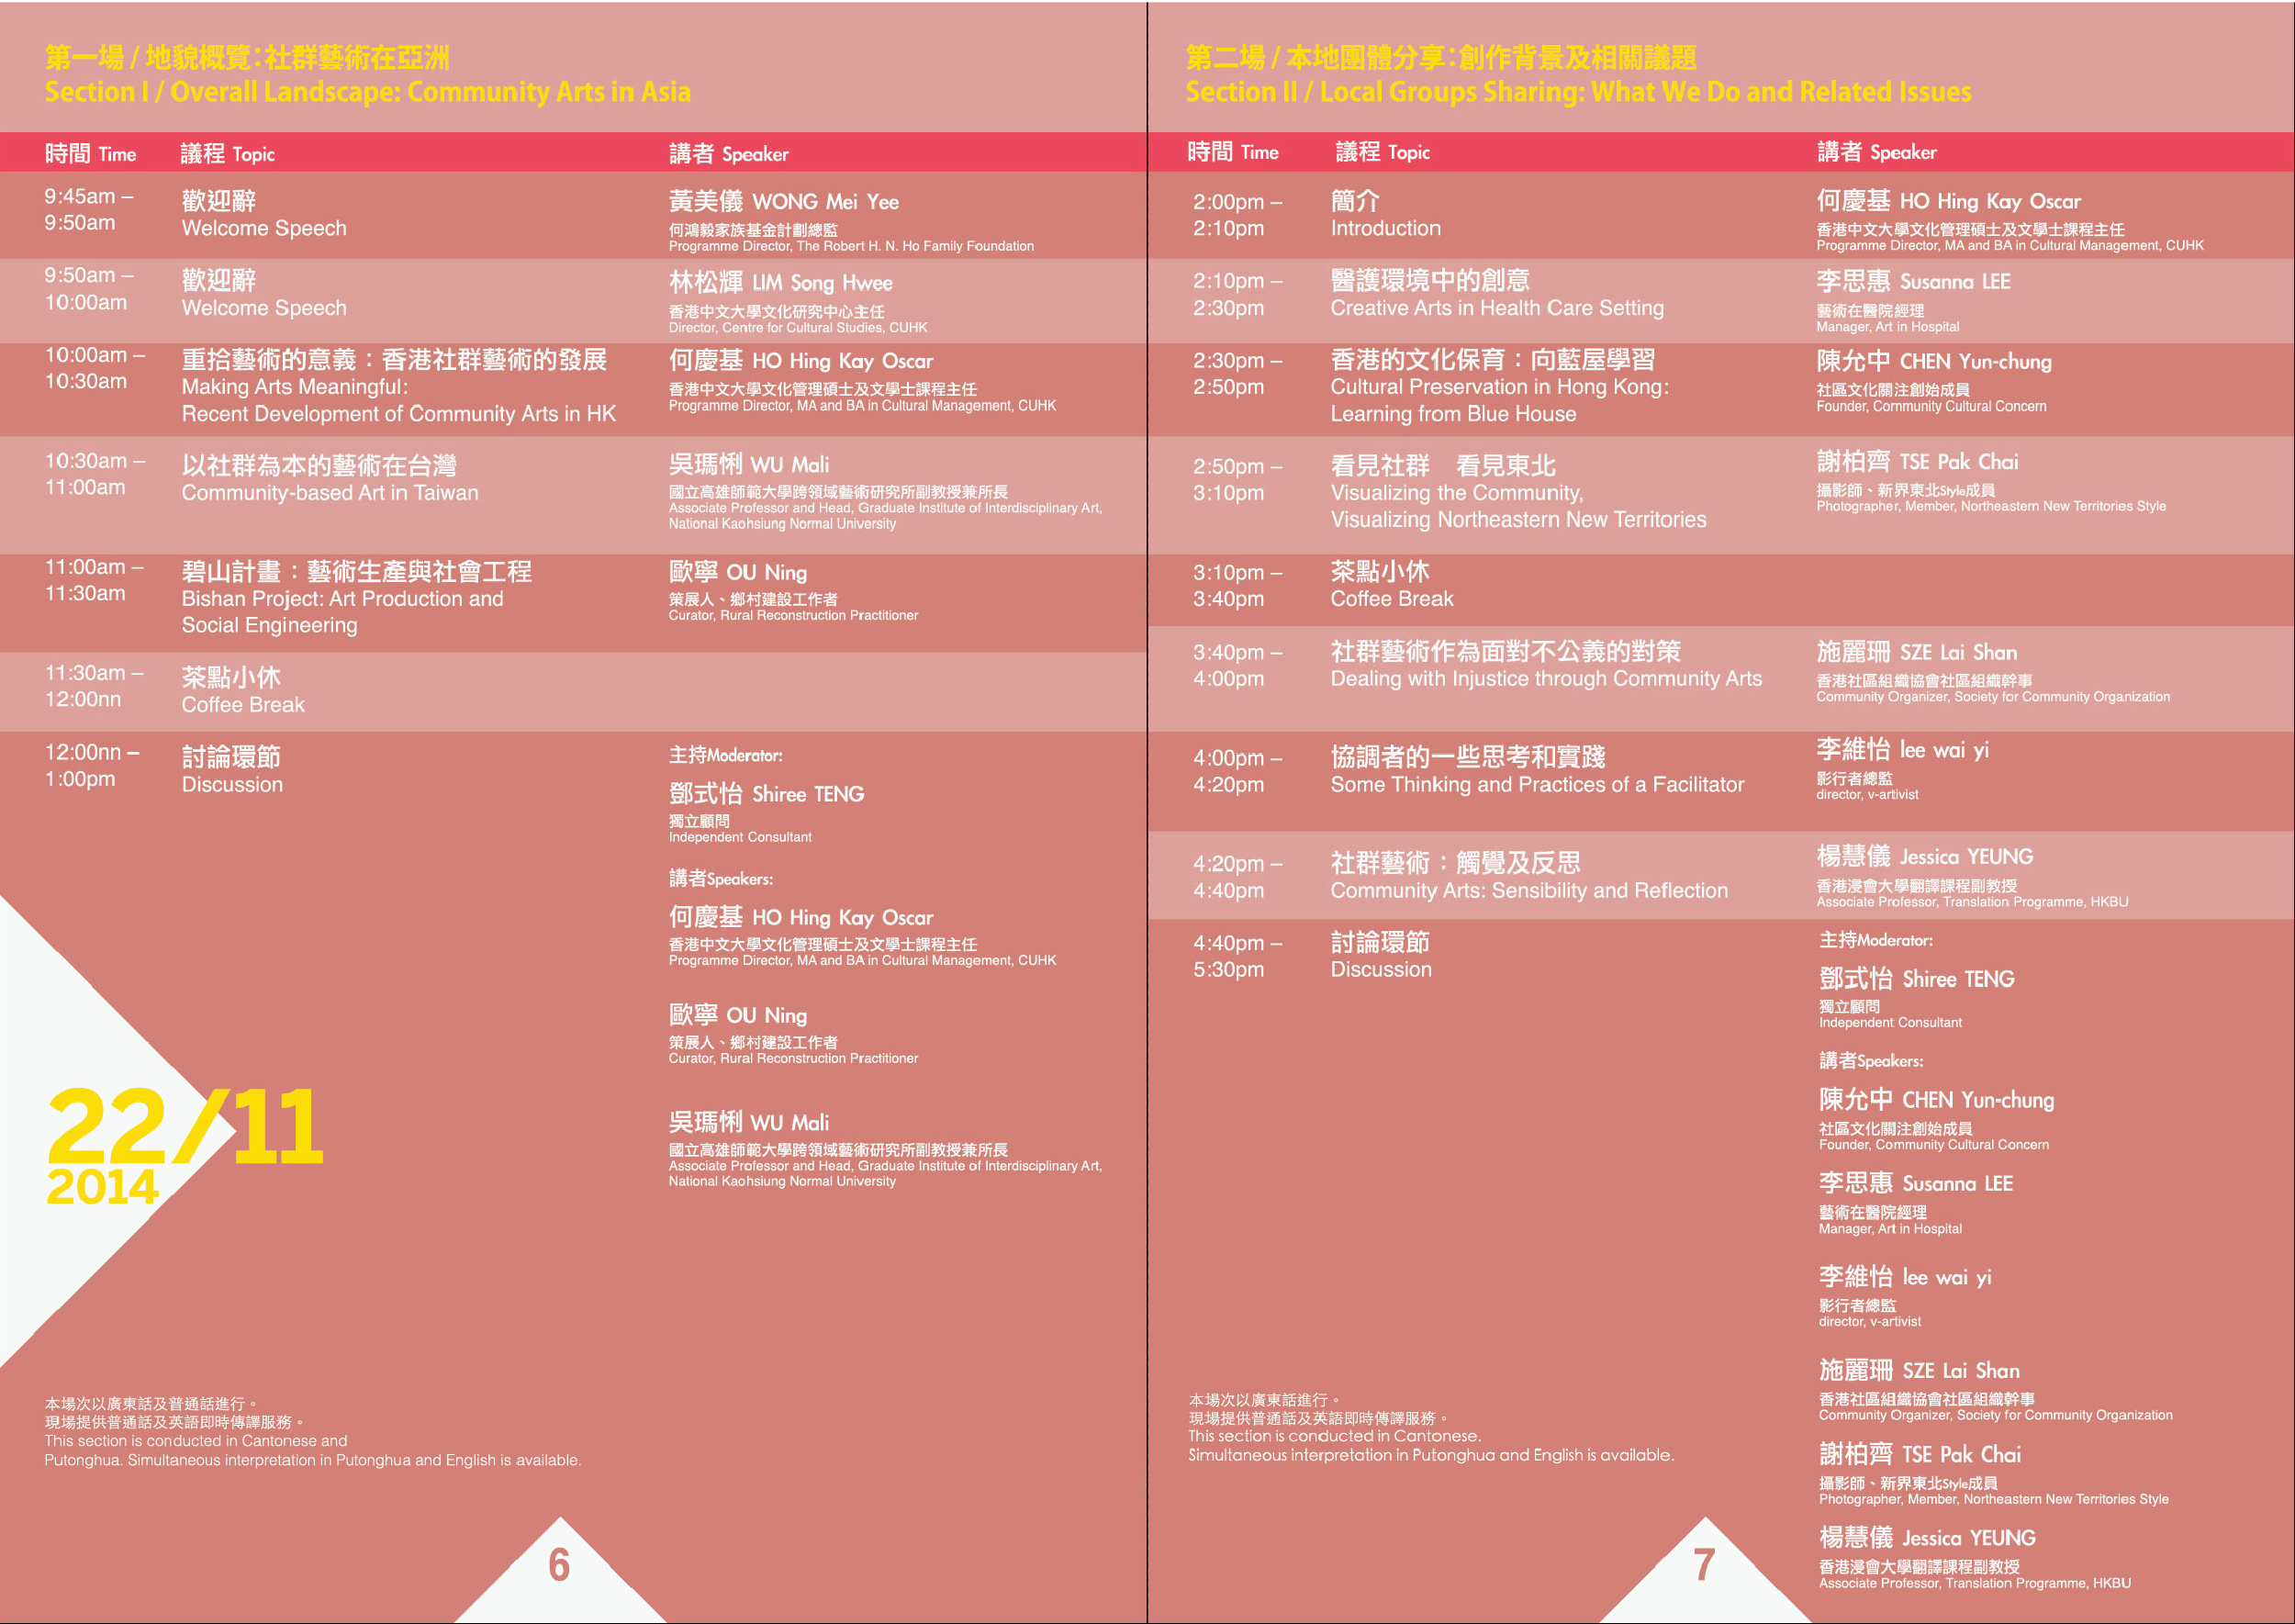 timetable01